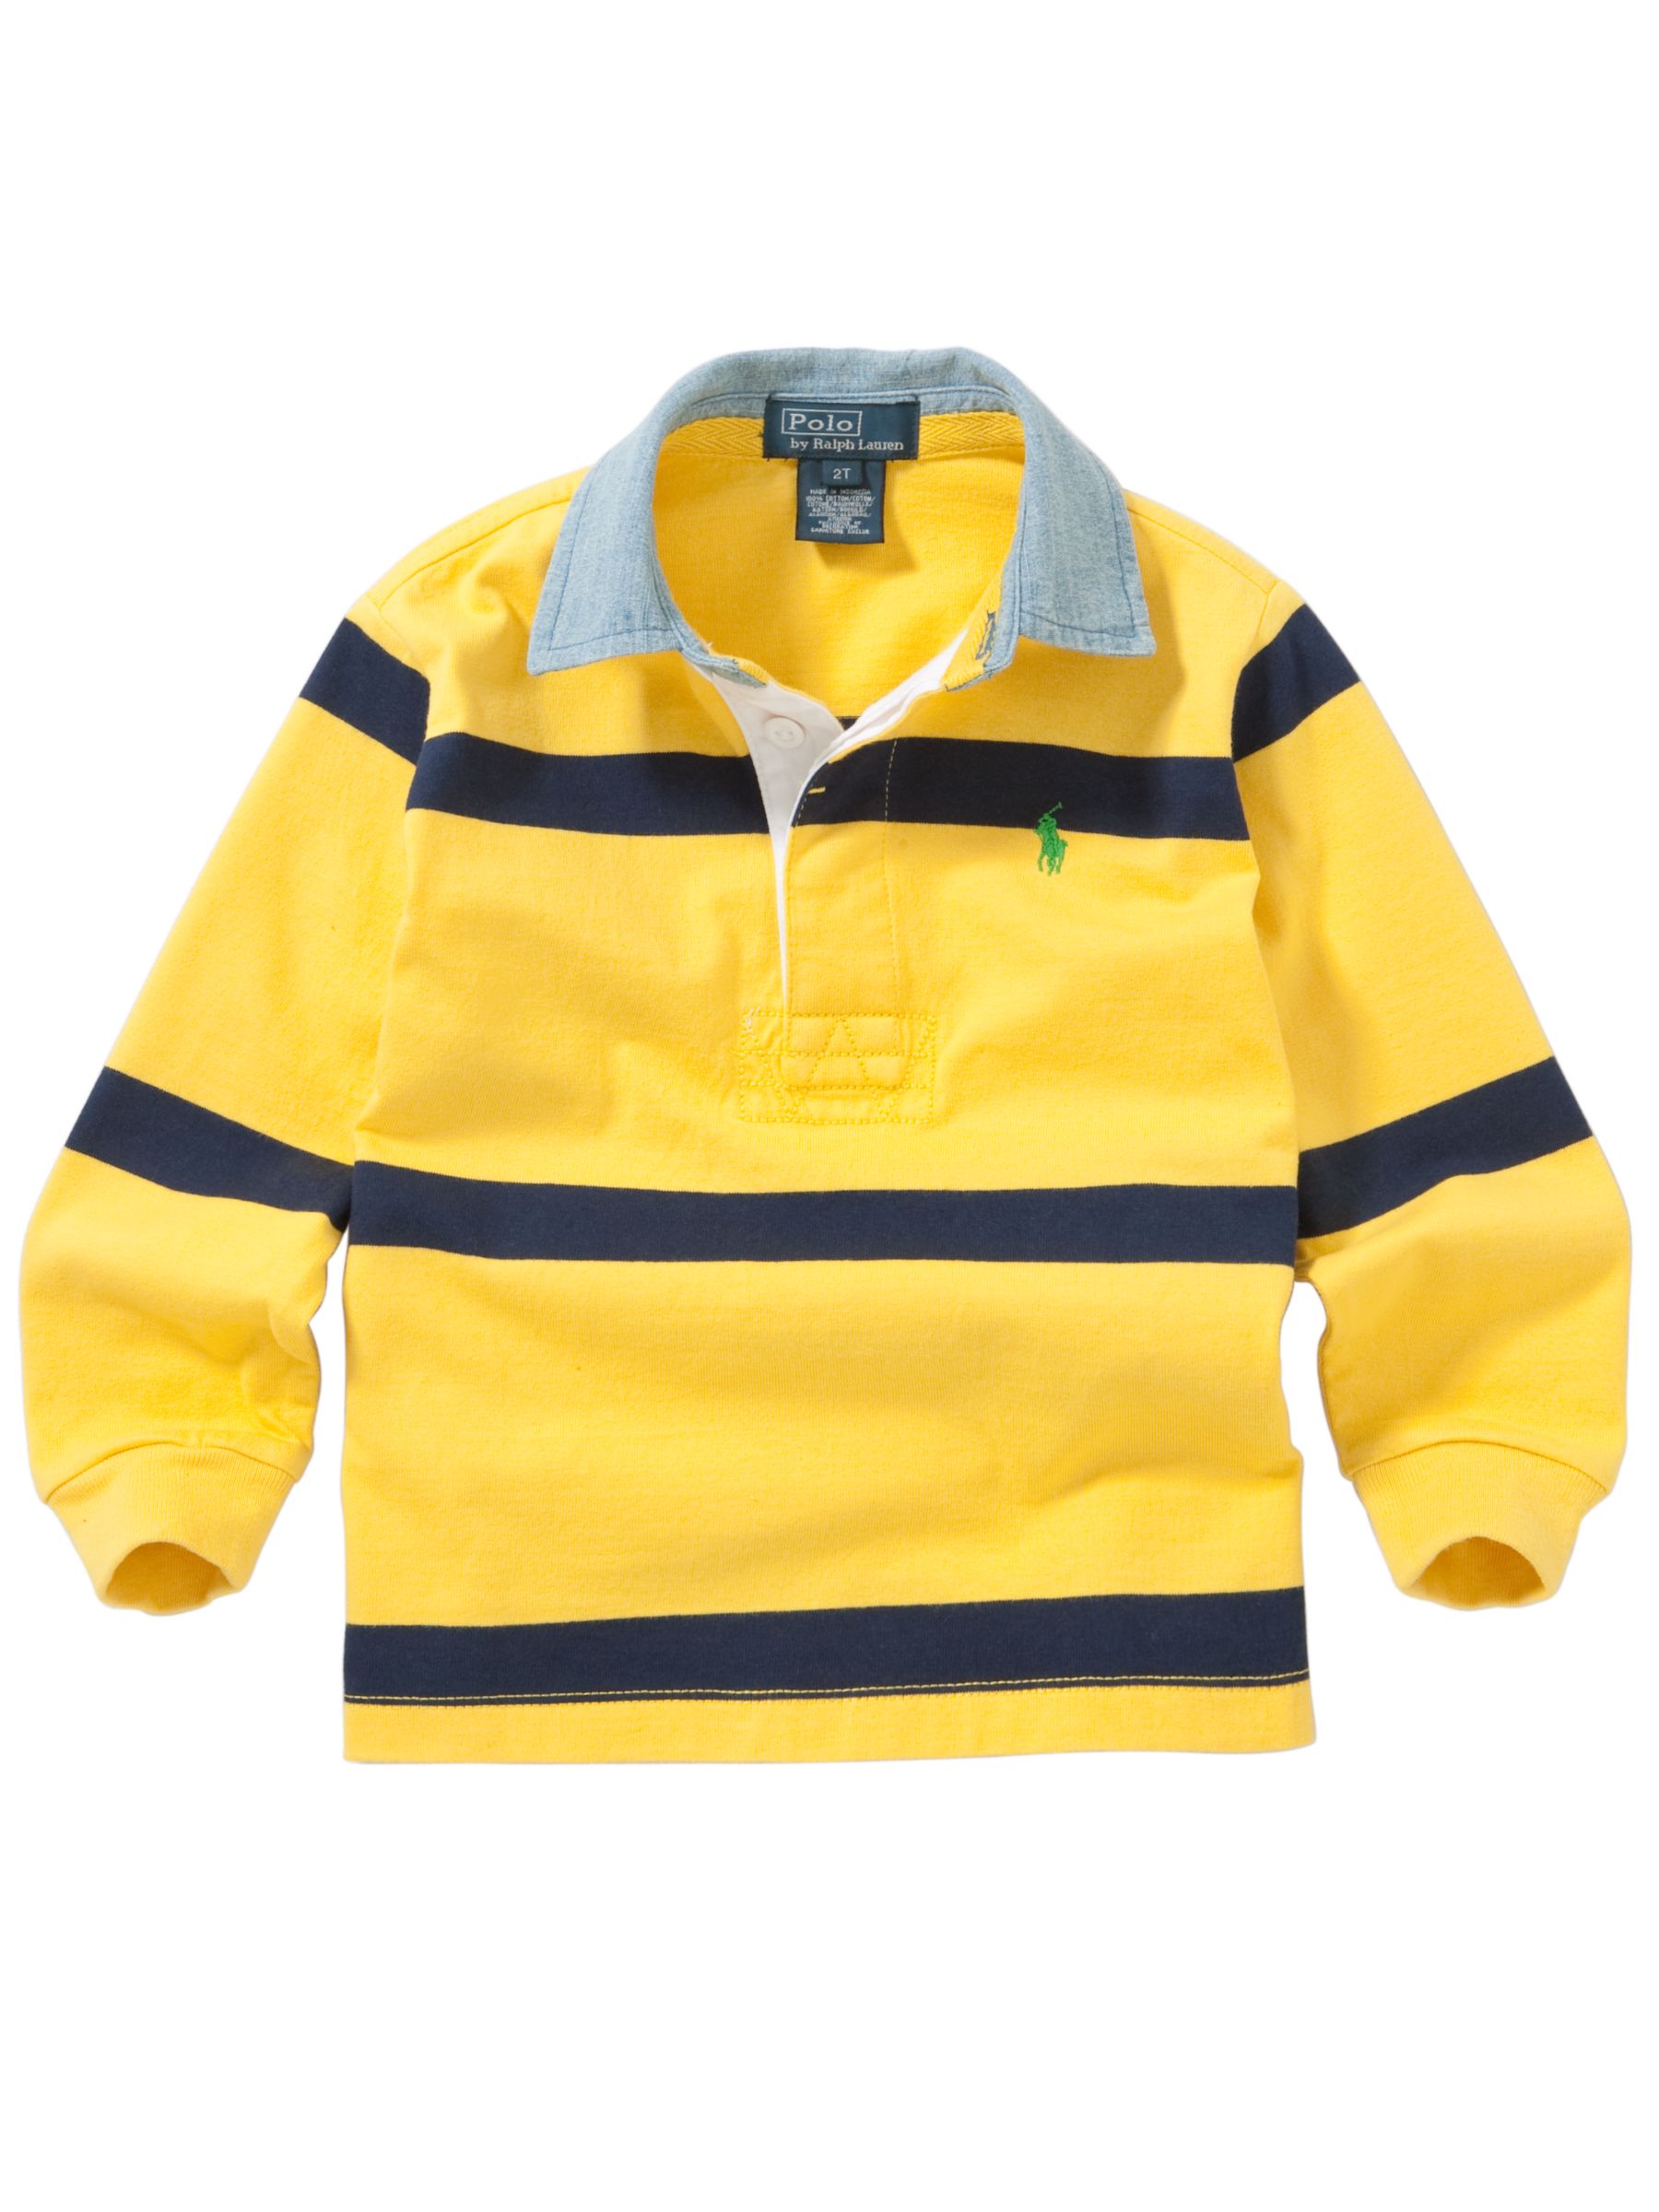 Polo Ralph Lauren Long Sleeve Rugby Shirt, Yellow